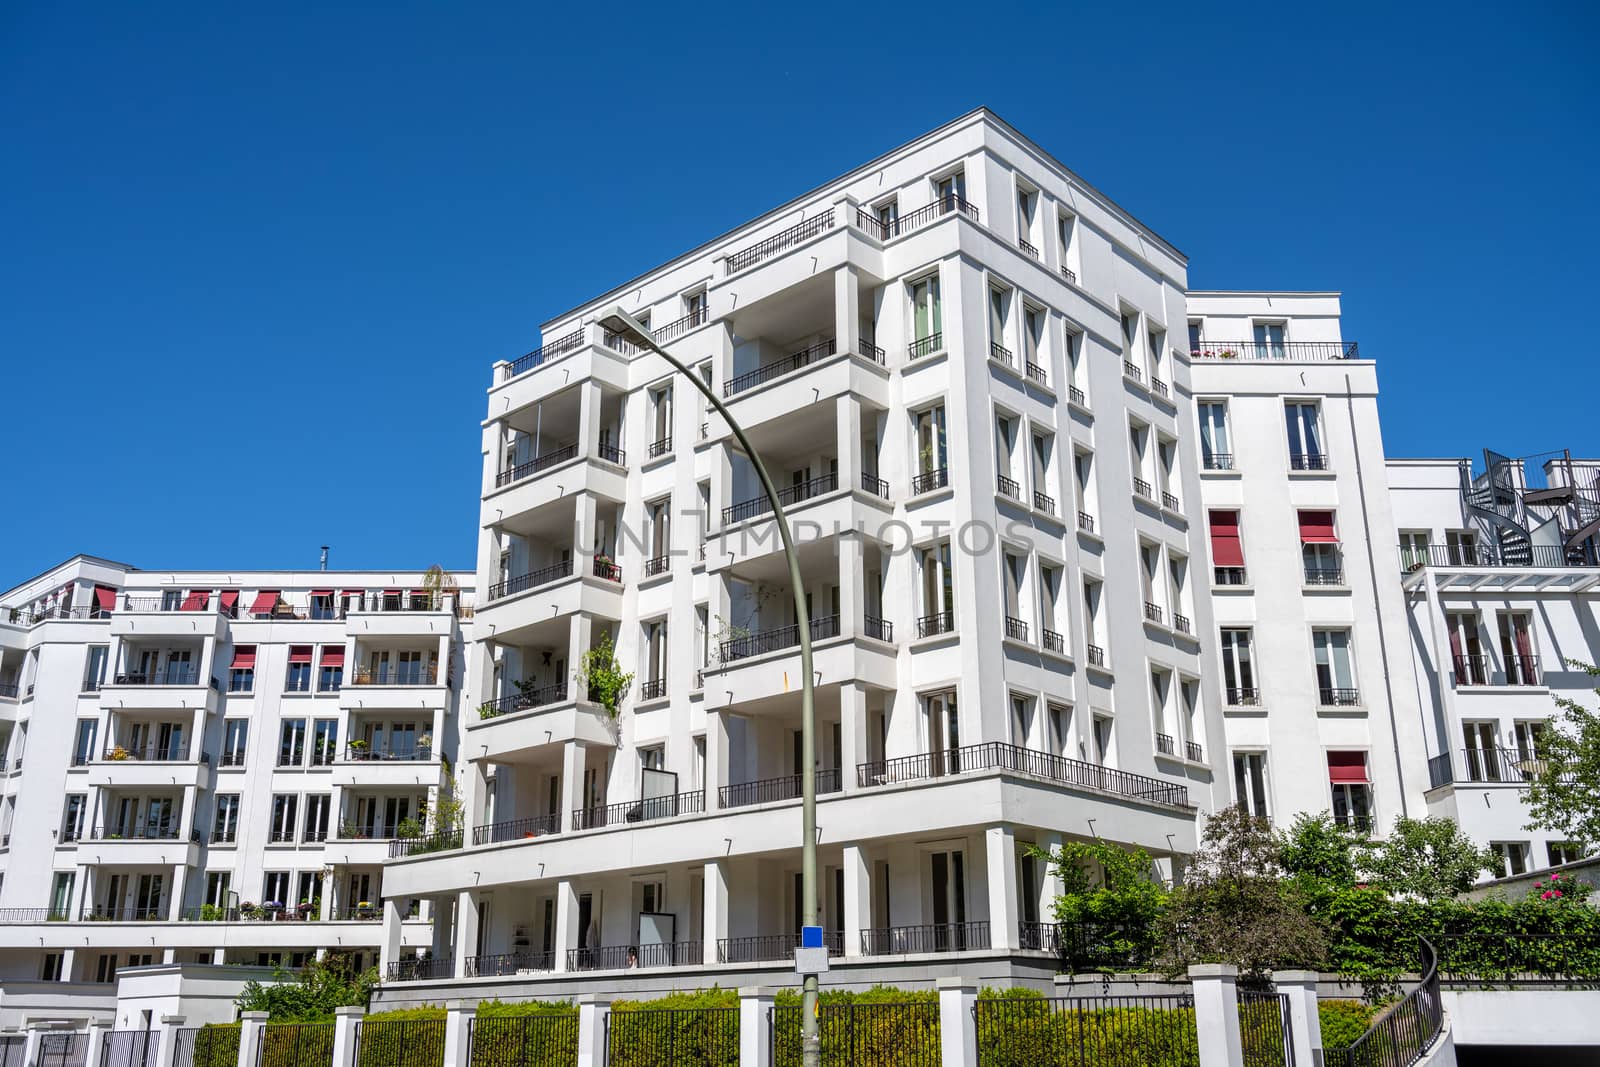 Modern white multi-family houses seen in Berlin, Germany